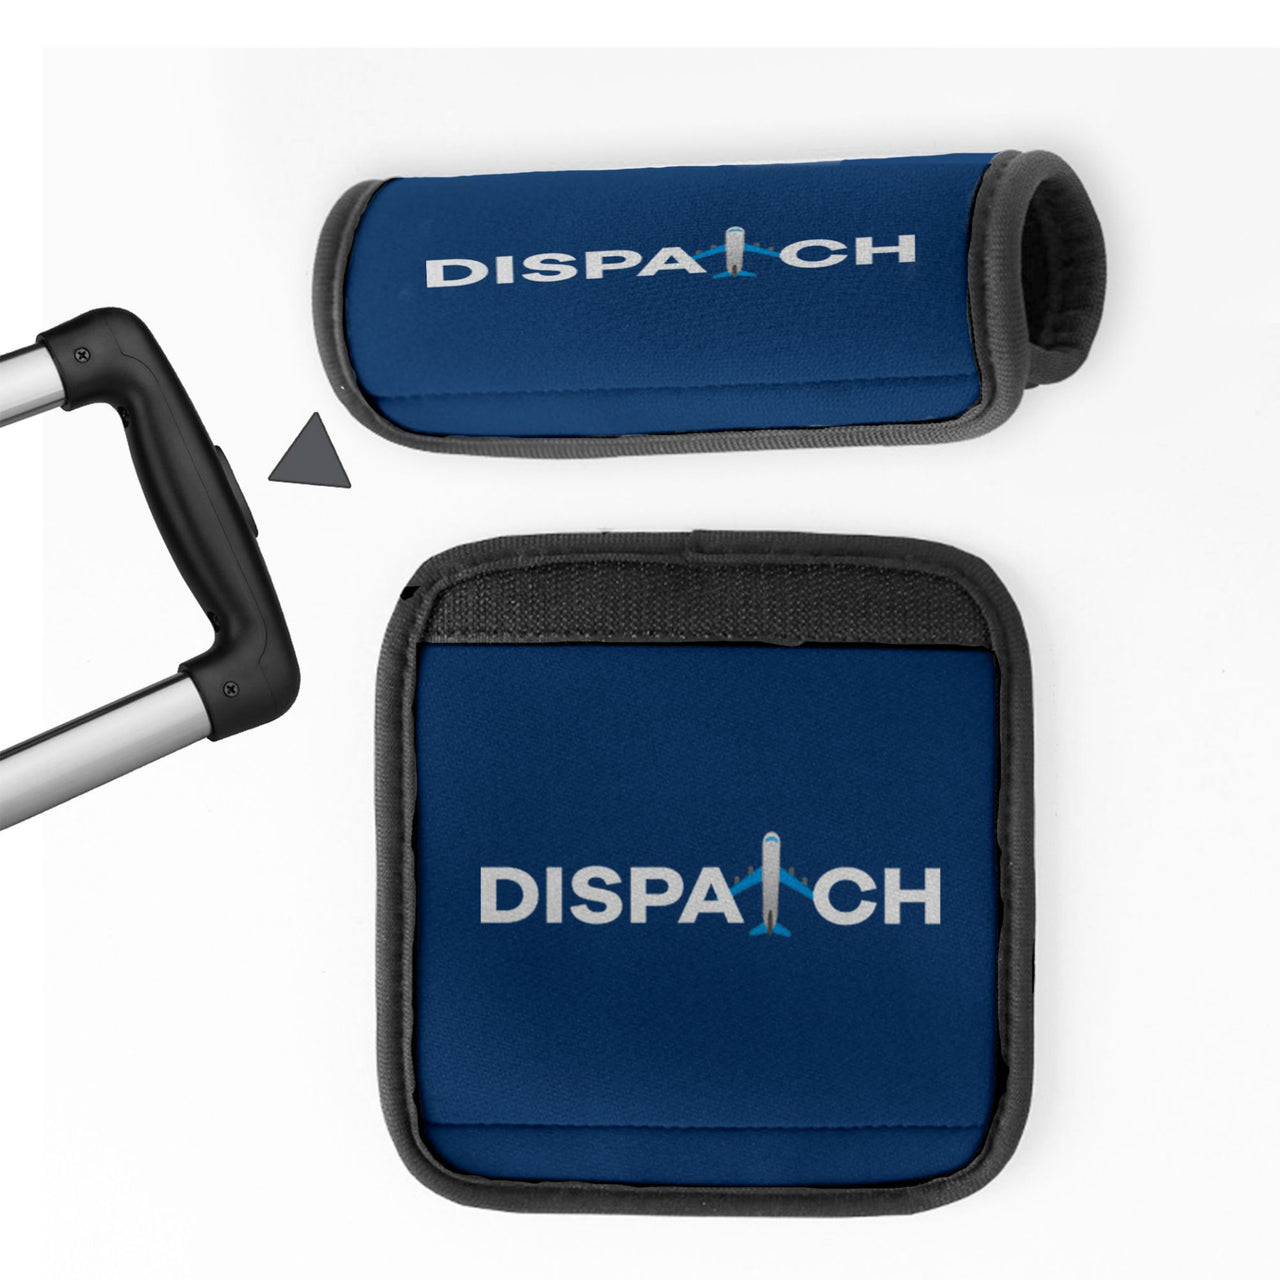 Dispatch Designed Neoprene Luggage Handle Covers